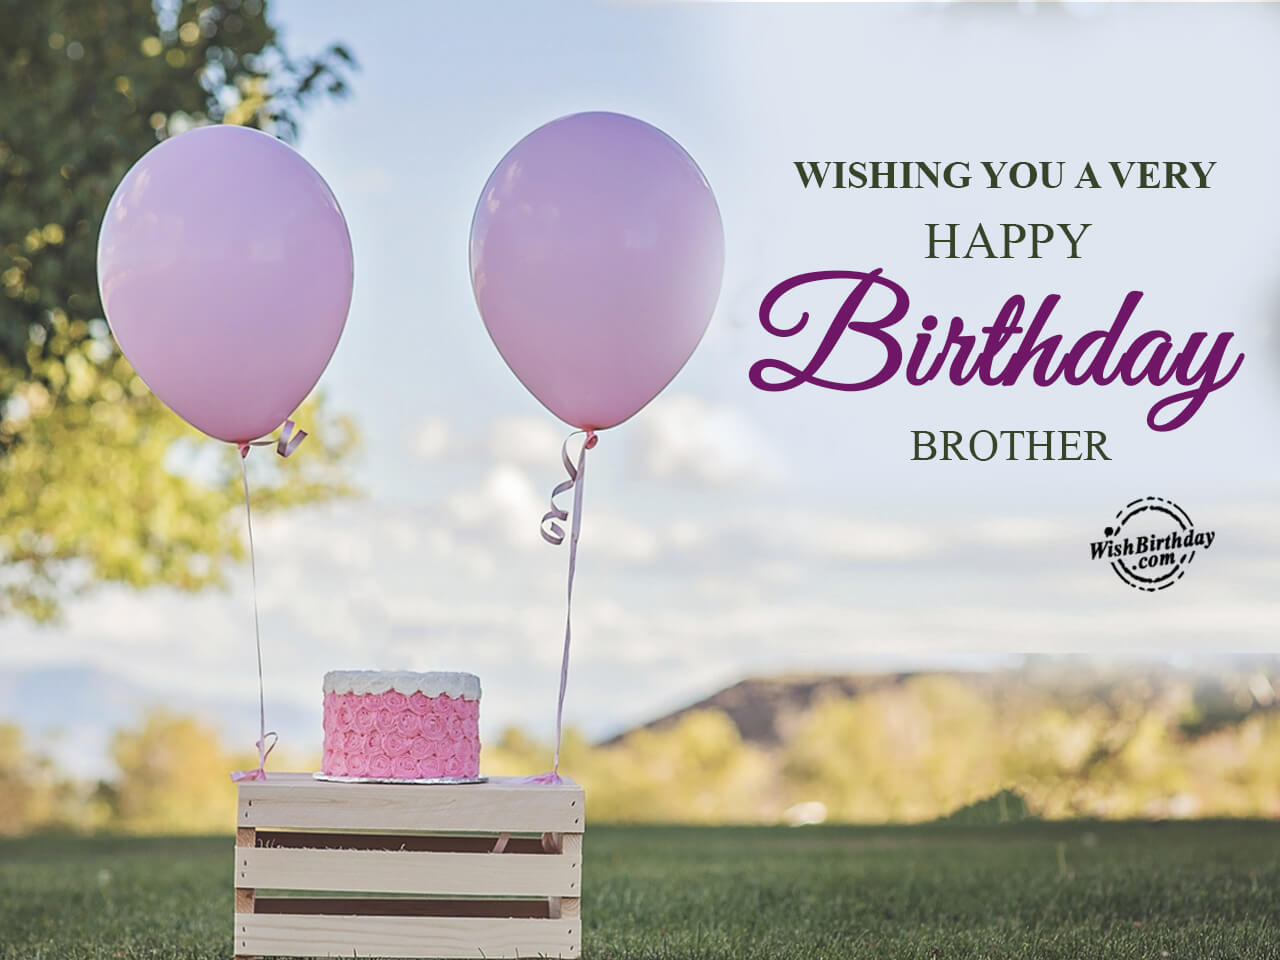 Happy Birthday Brother - Birthday Wishes, Happy Birthday Pictures